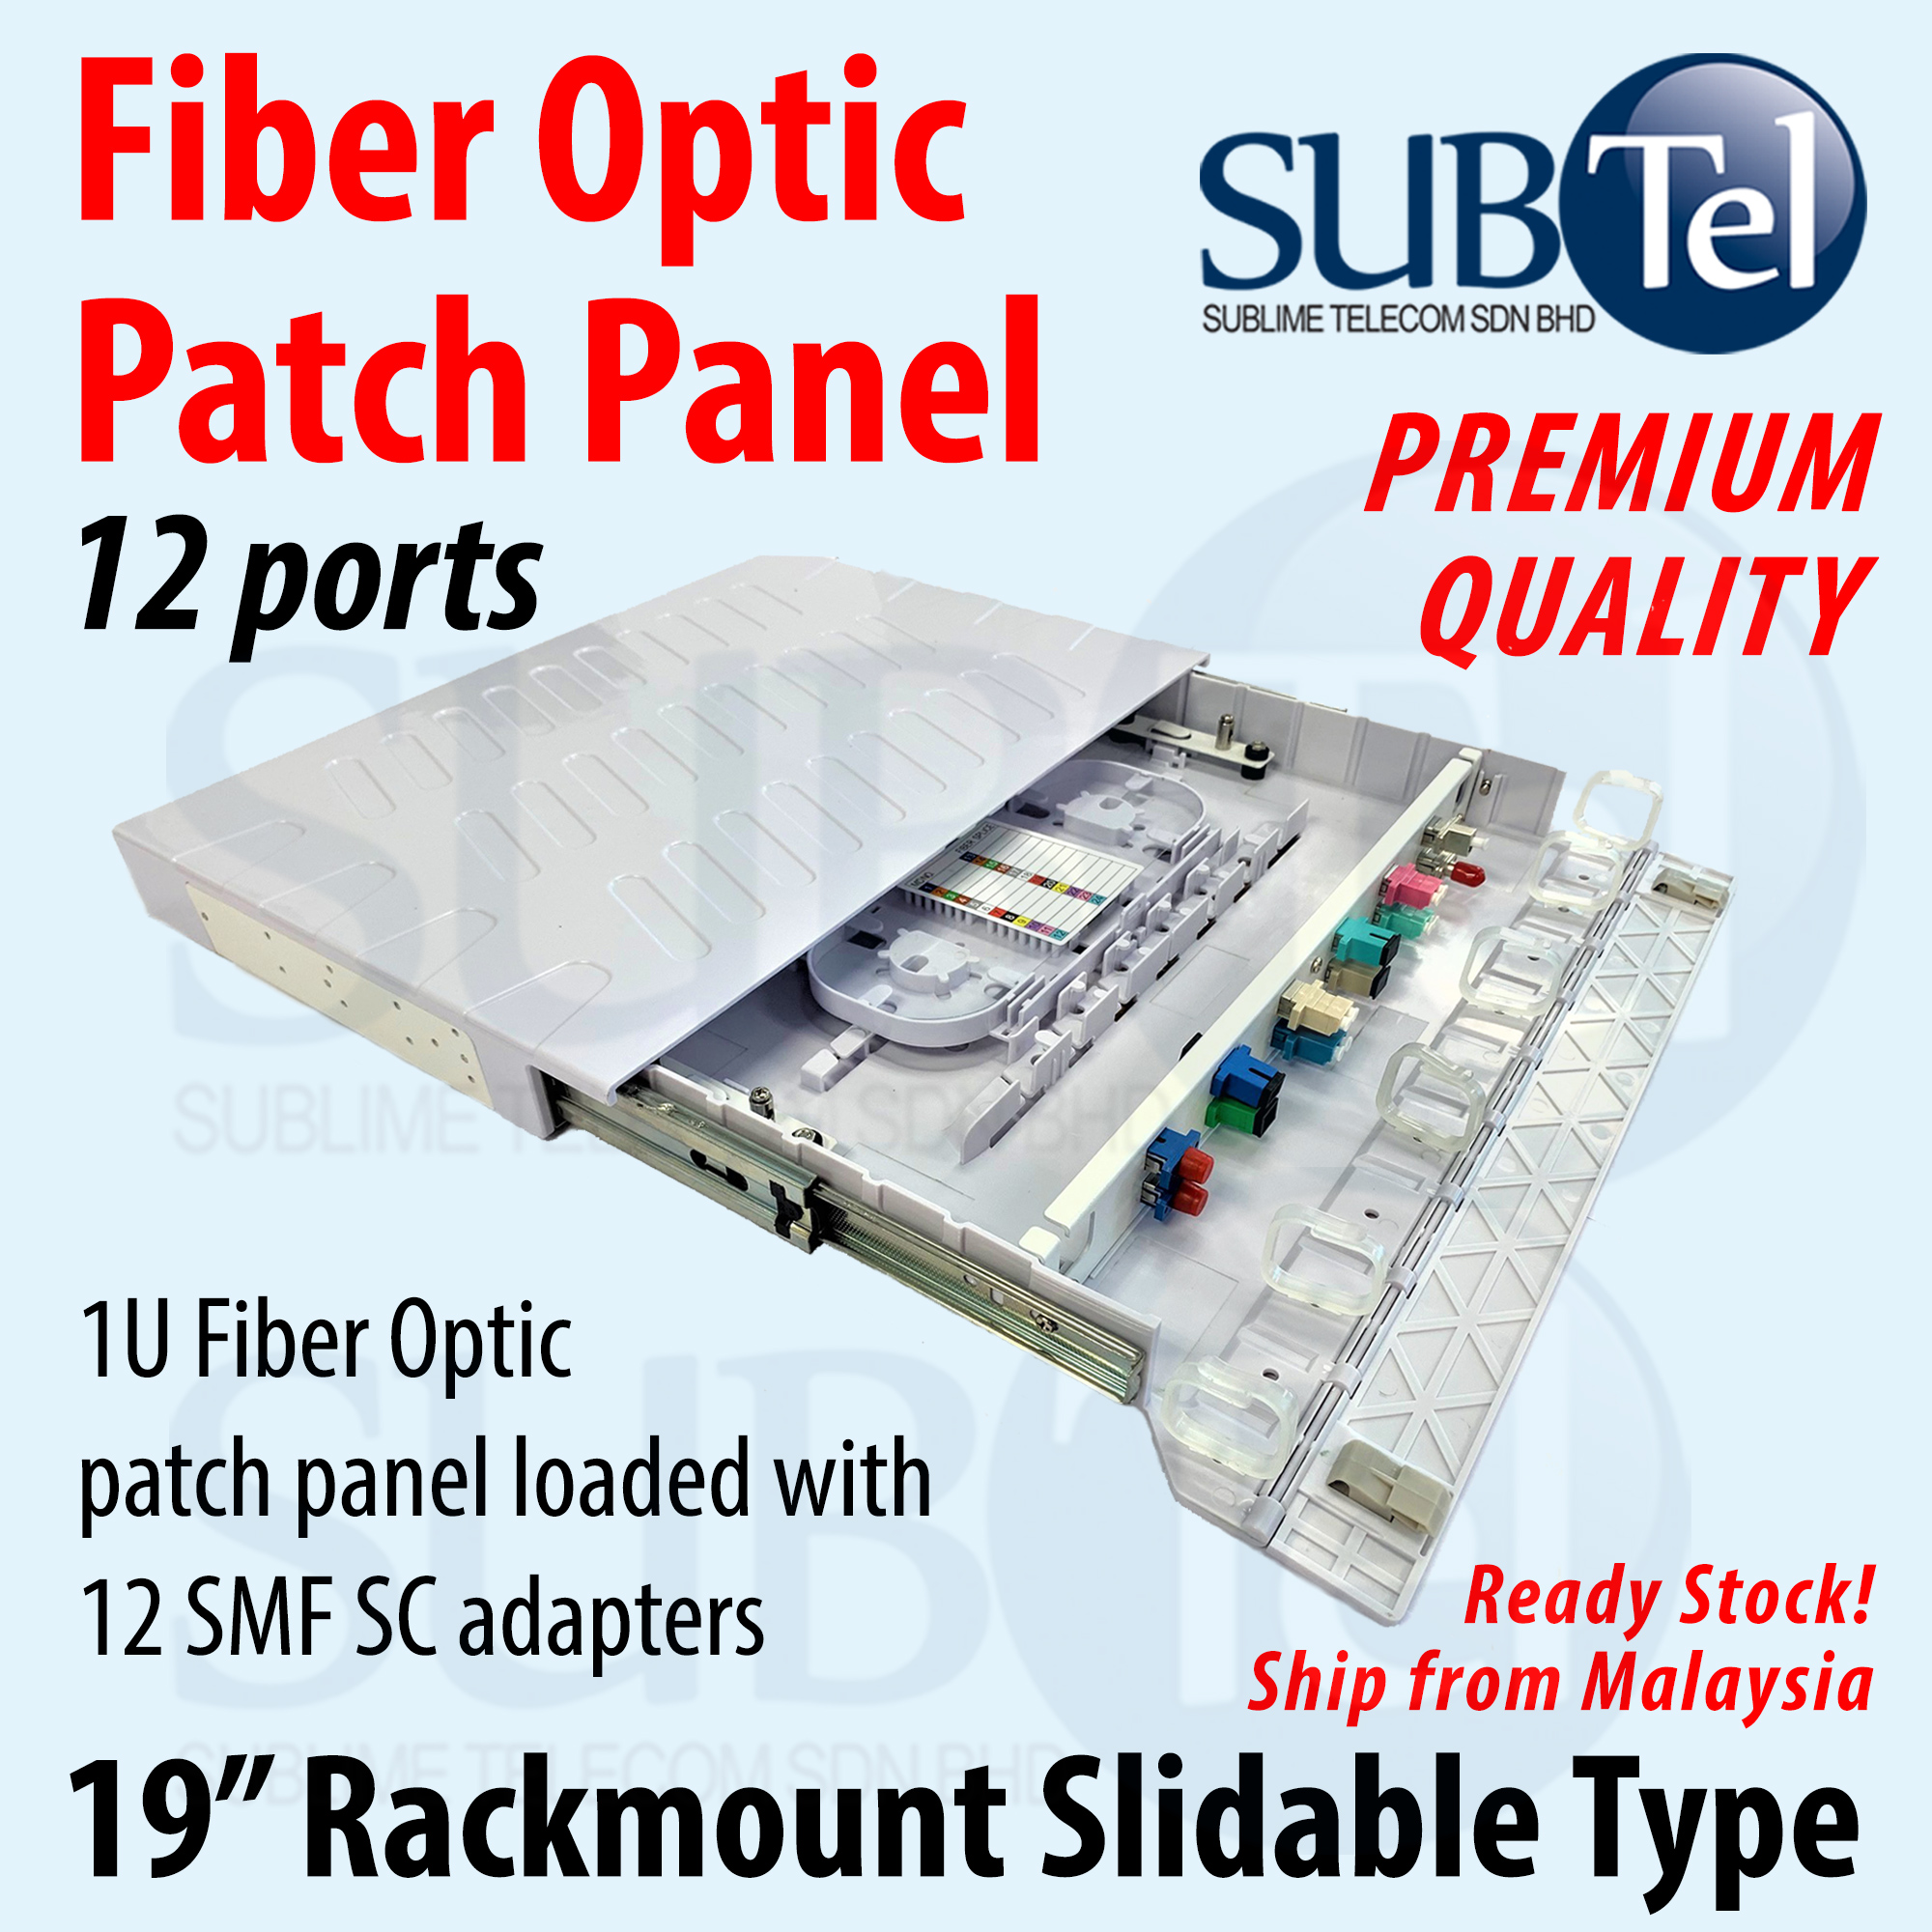 1U 12 Port Fiber Optic Patch Panel 19' Rackmount Slidable Type with SC